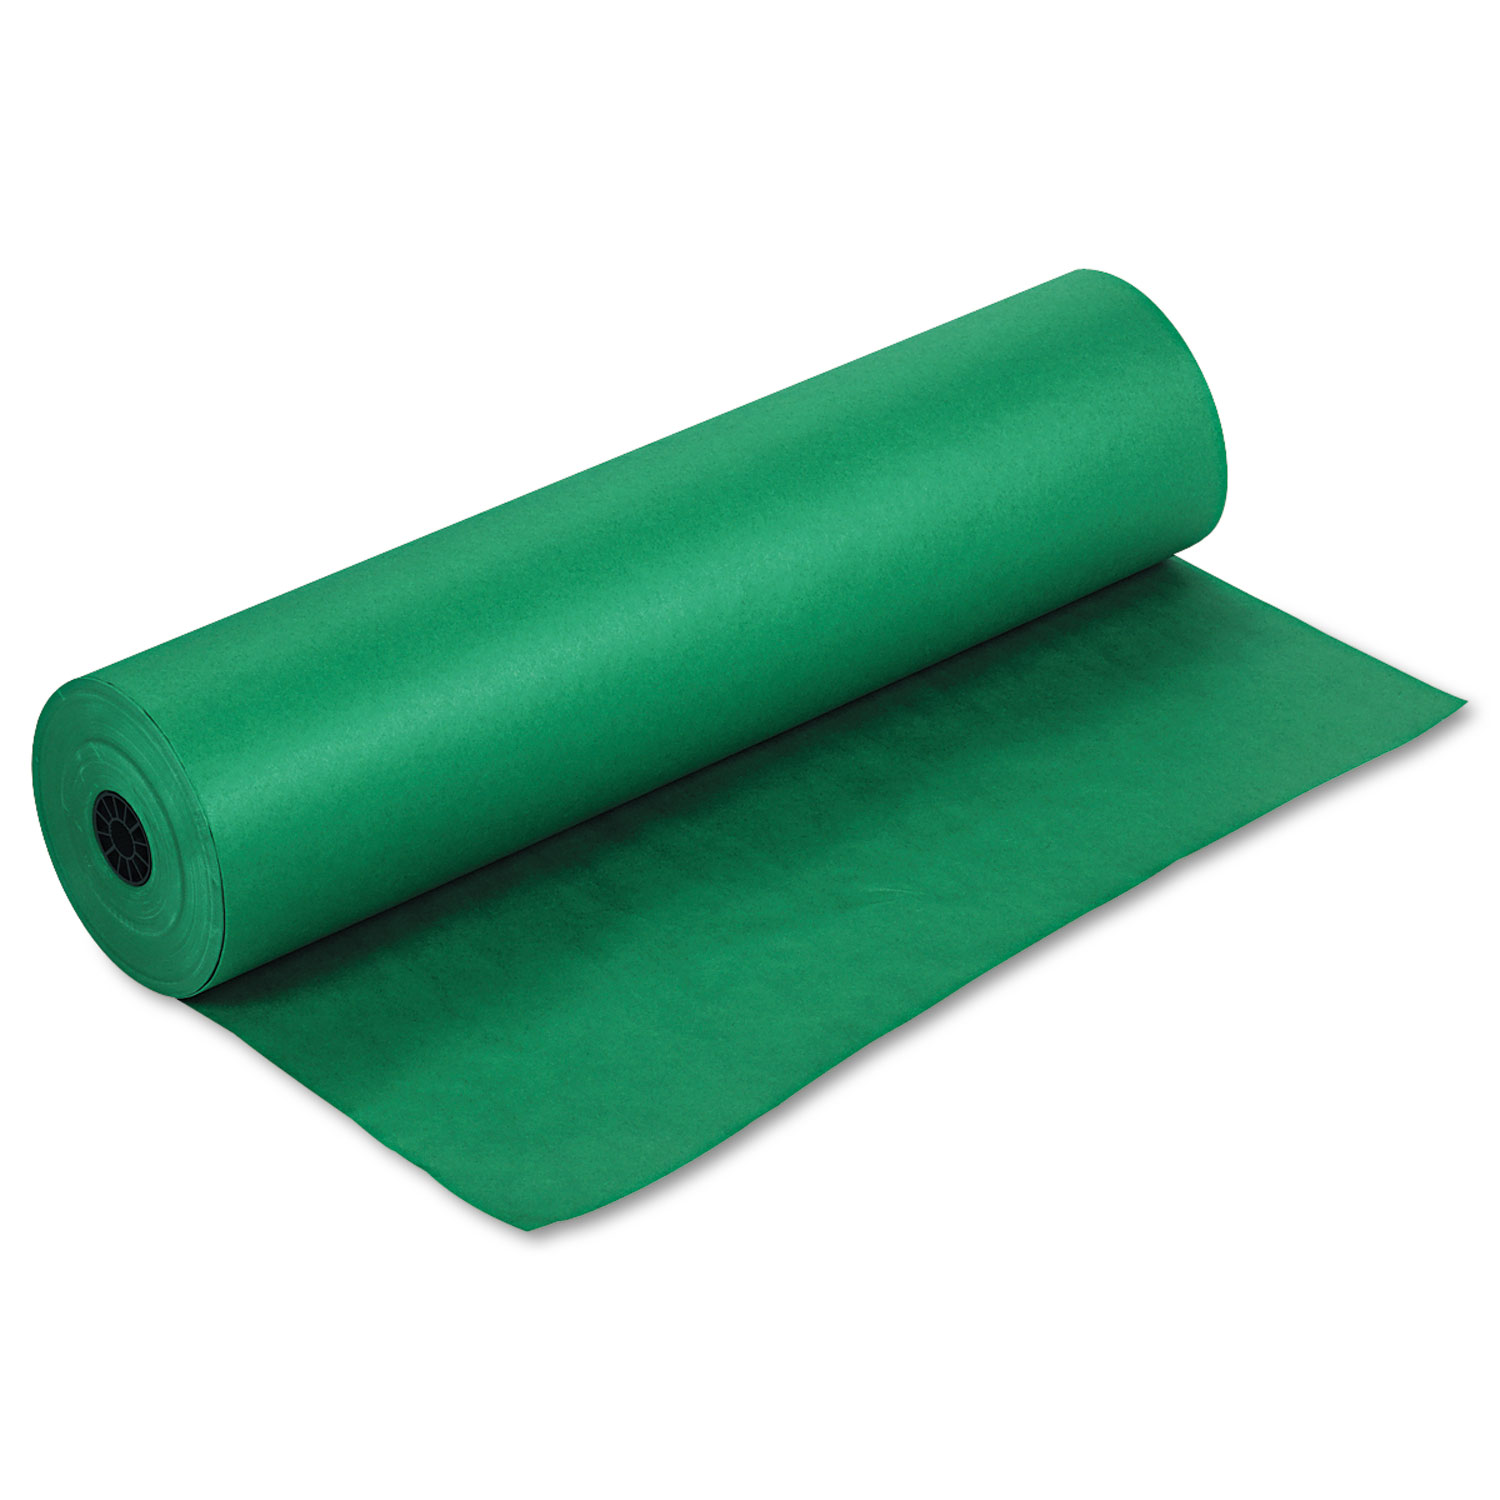  Pacon 67141 Spectra ArtKraft Duo-Finish Paper, 48lb, 36 x 1000ft, Emerald Green (PAC67141) 